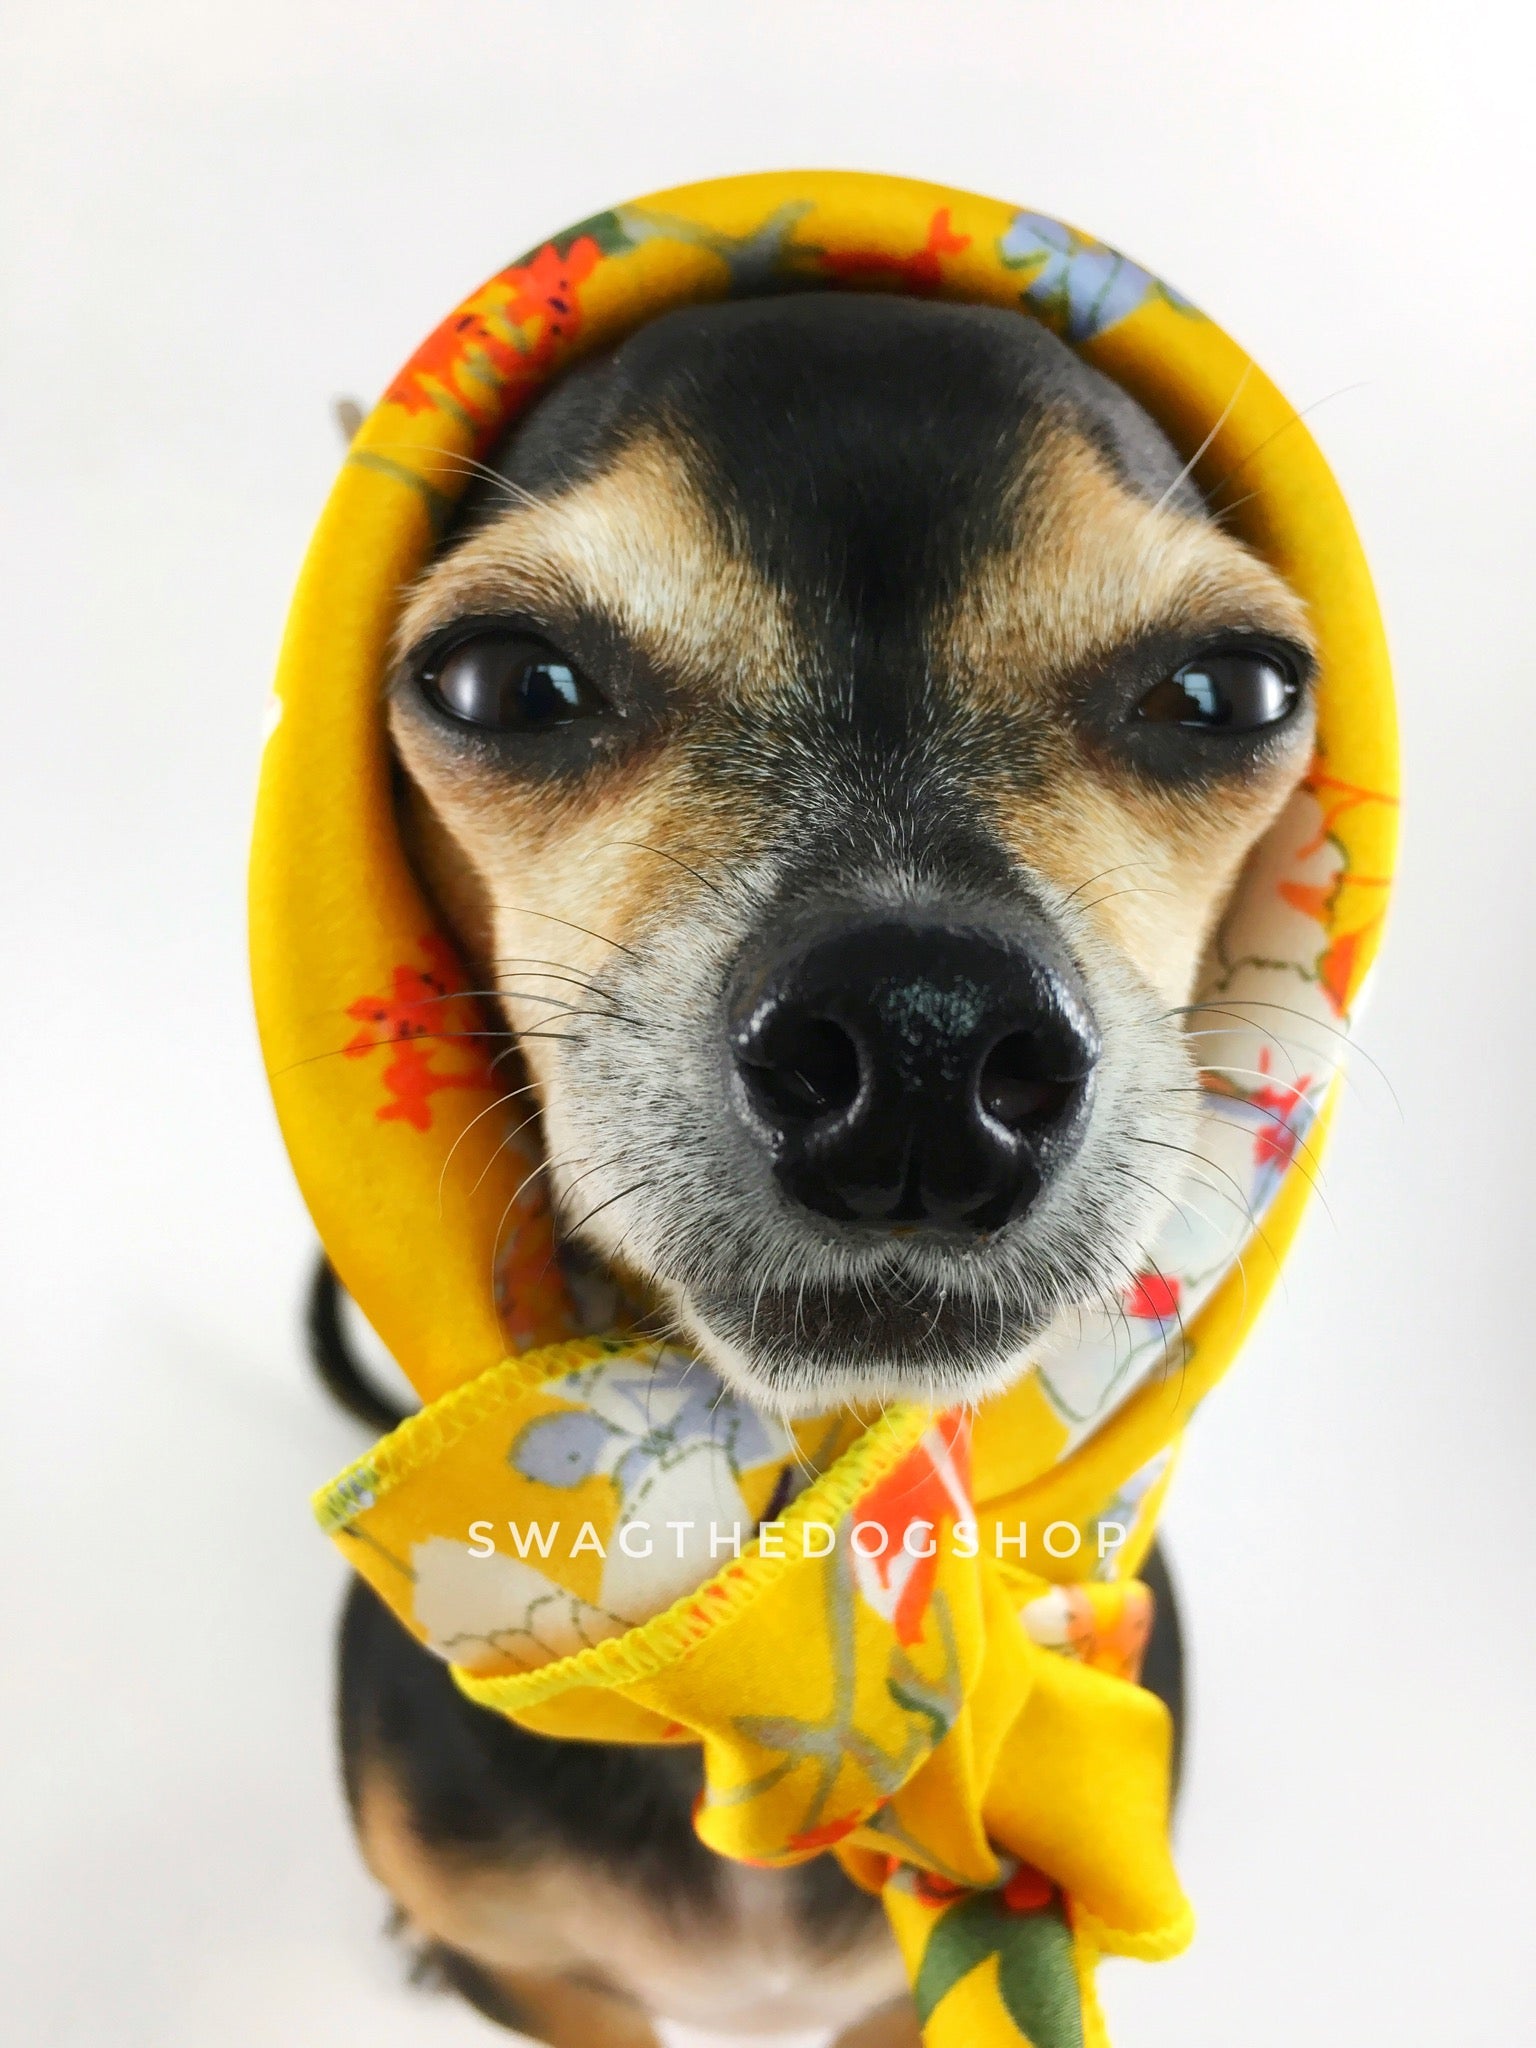 Yellow Wild Flower Swagdana Scarf - Bust of Cute Chihuahua Wearing Swagdana Scarf as Headscarf. Dog Bandana. Dog Scarf.